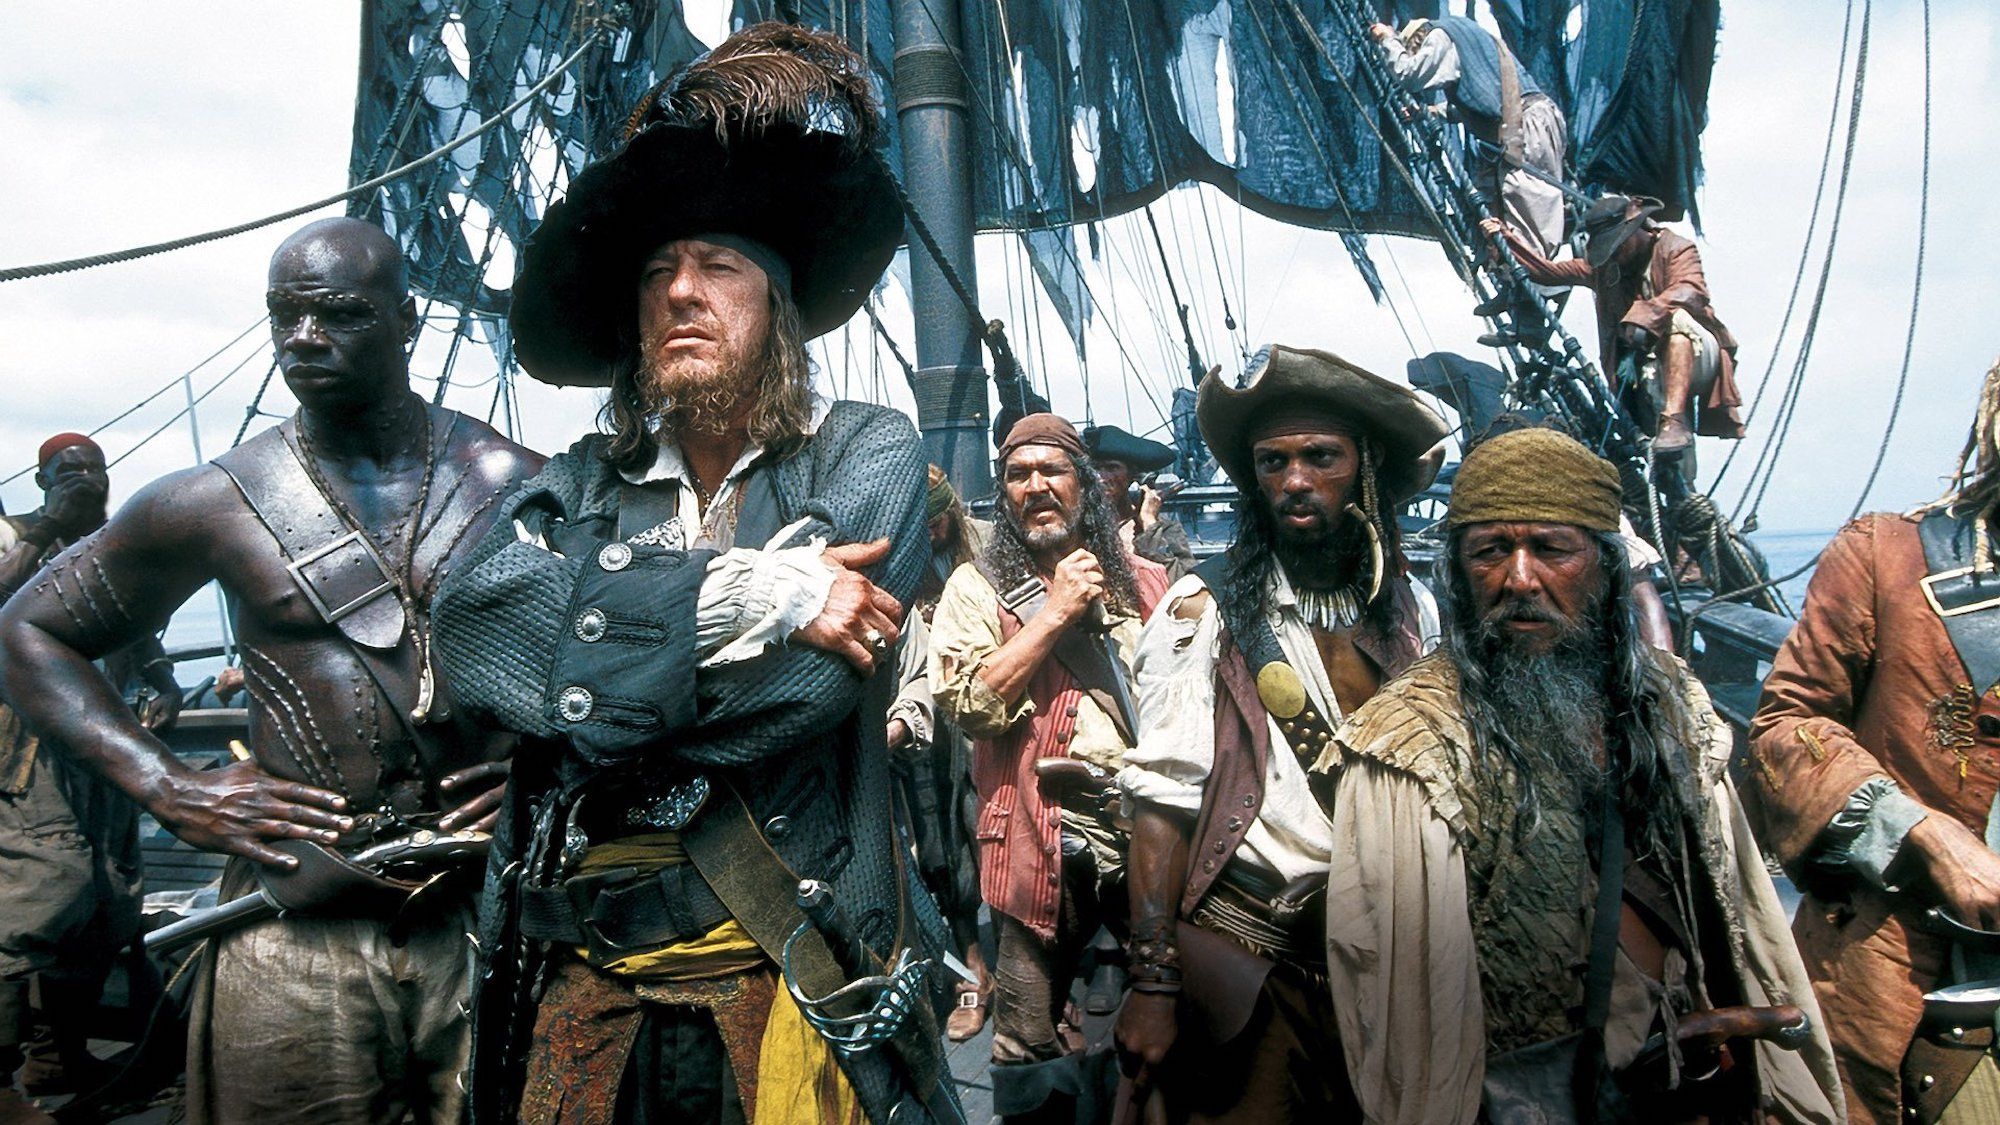 Piratas del Caribe, 10 curiosidades de la saga